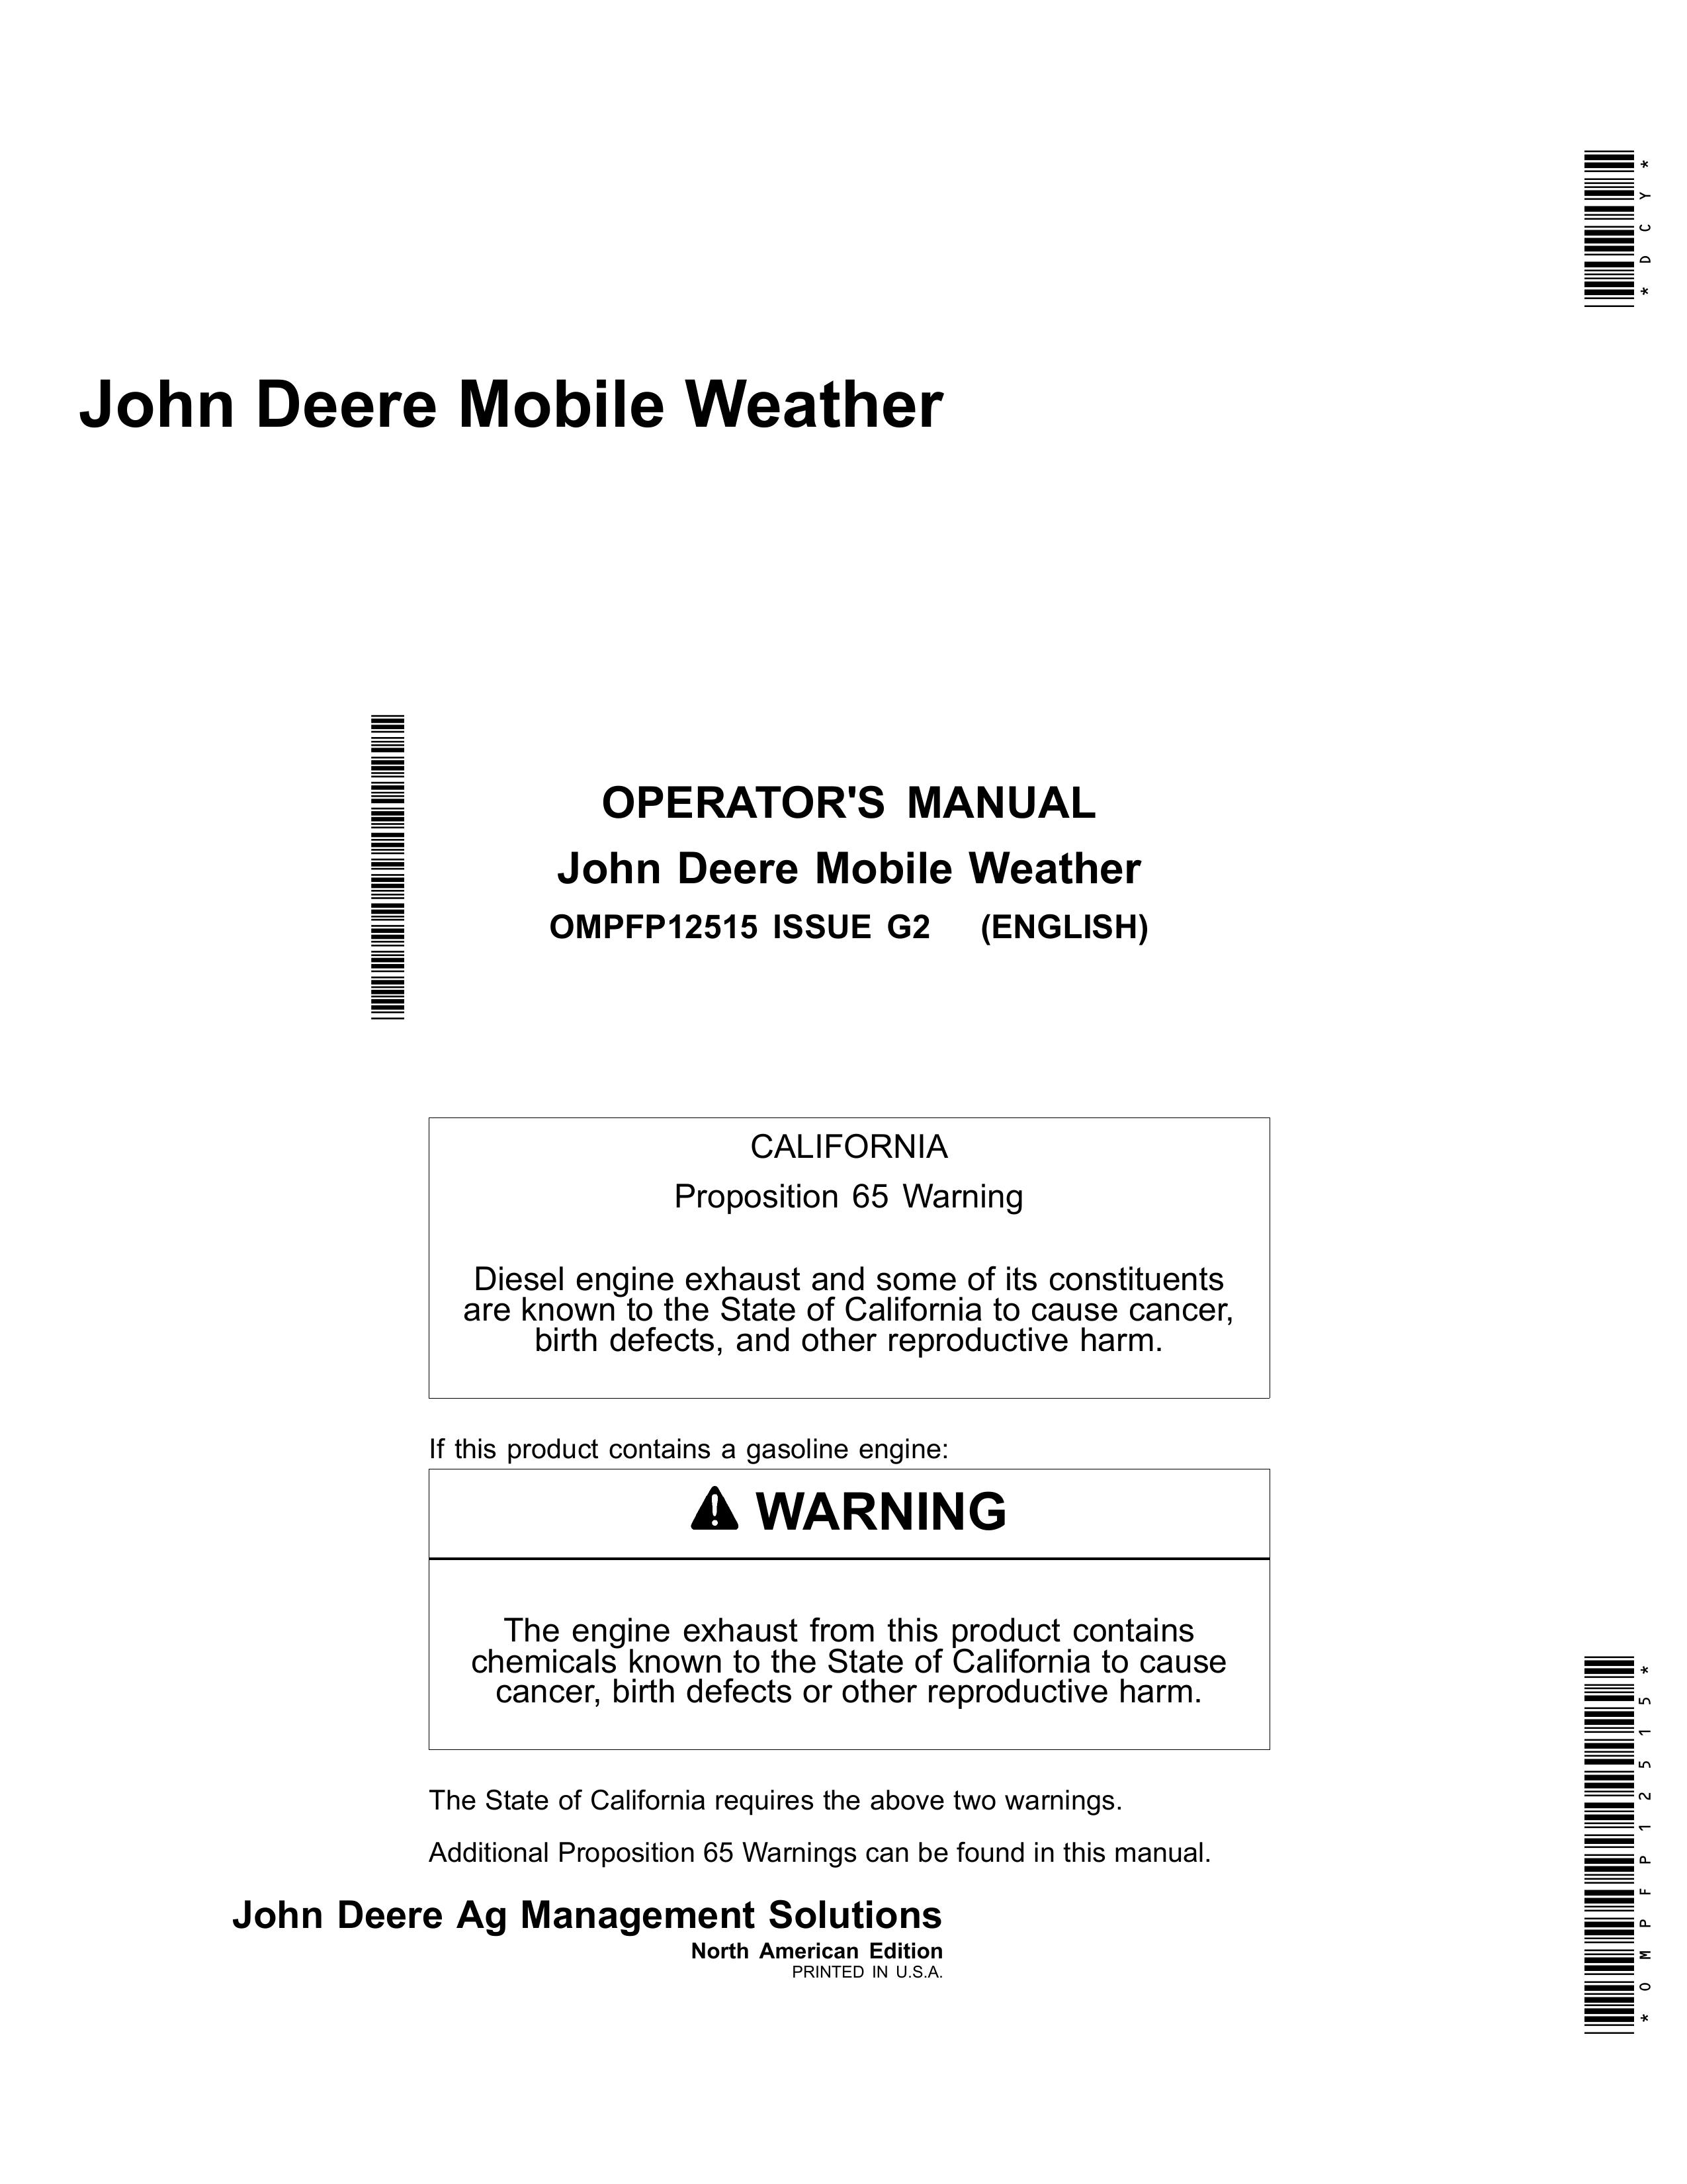 John Deere OMPFP12515 Weather Radio User Manual